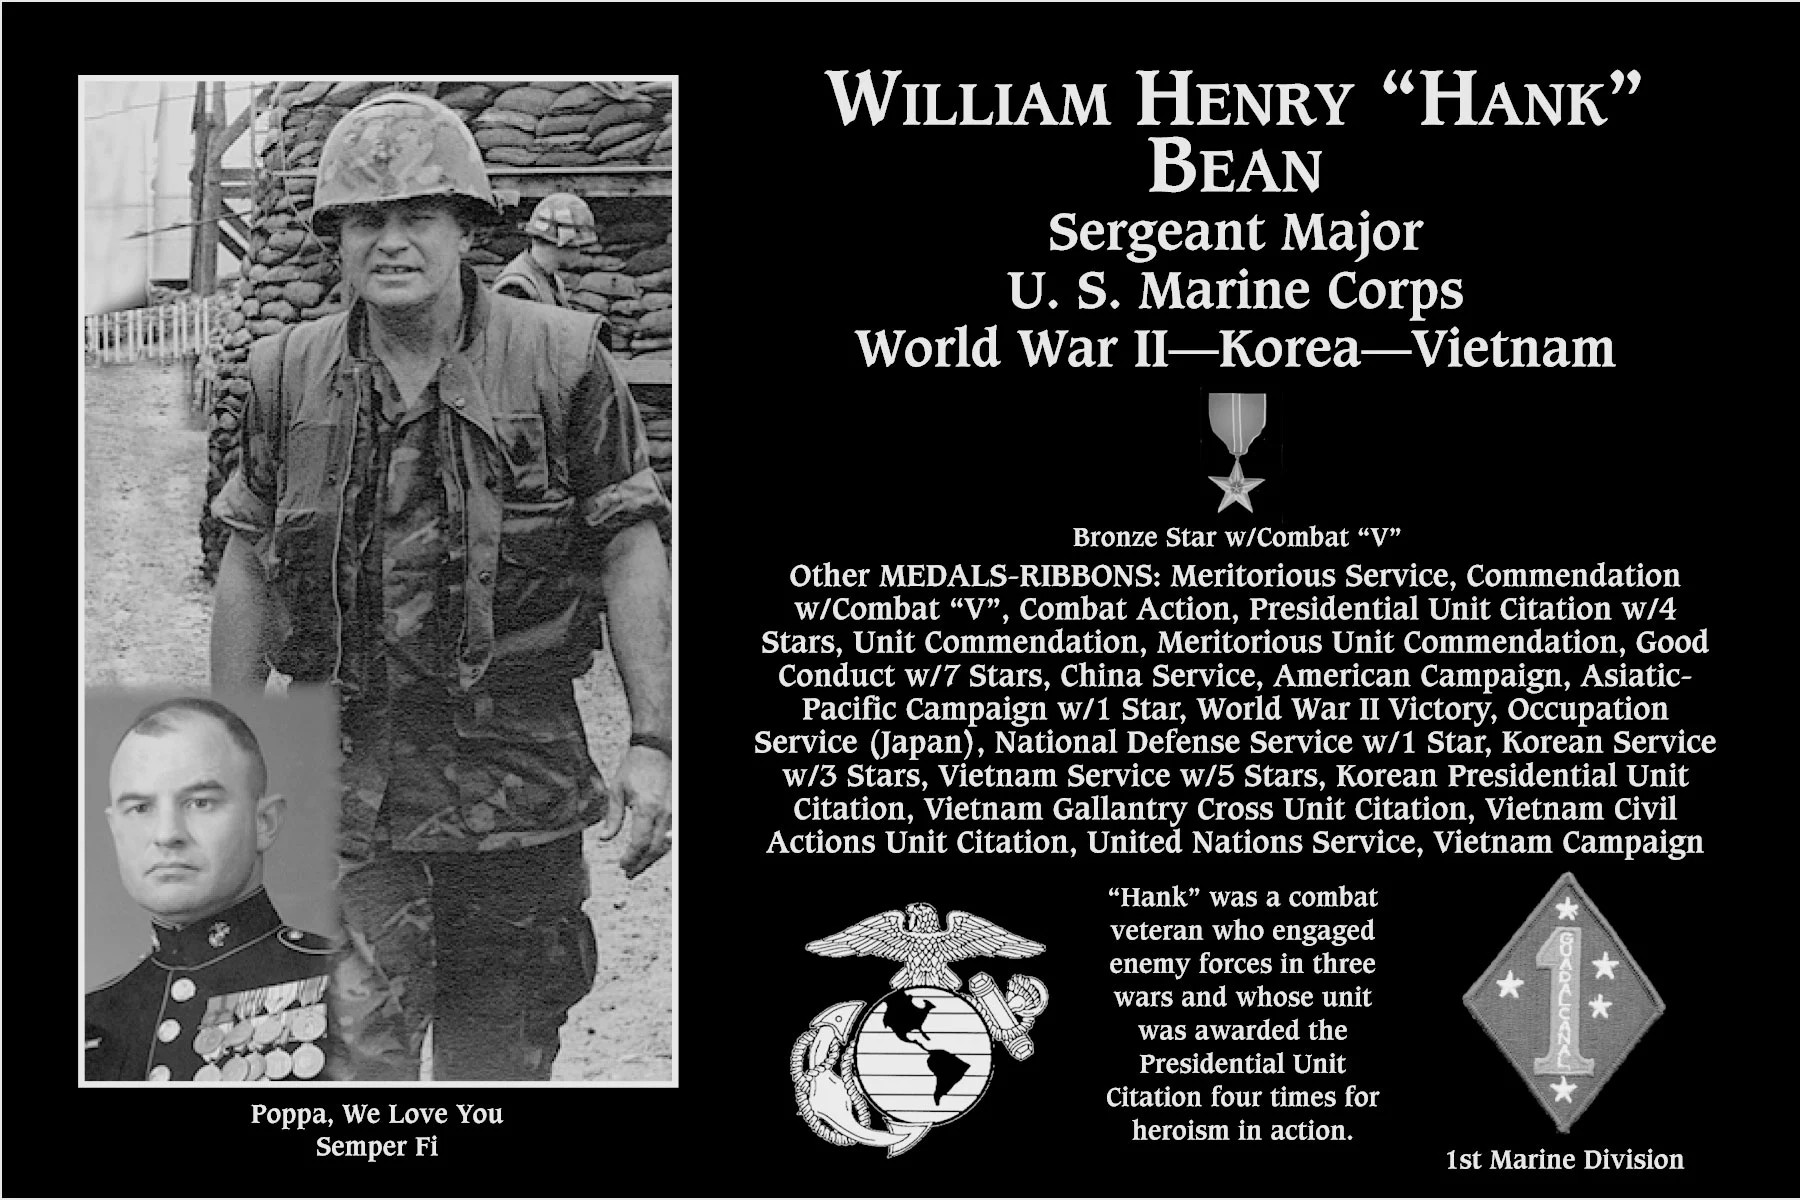 William Henry “Hank” Bean